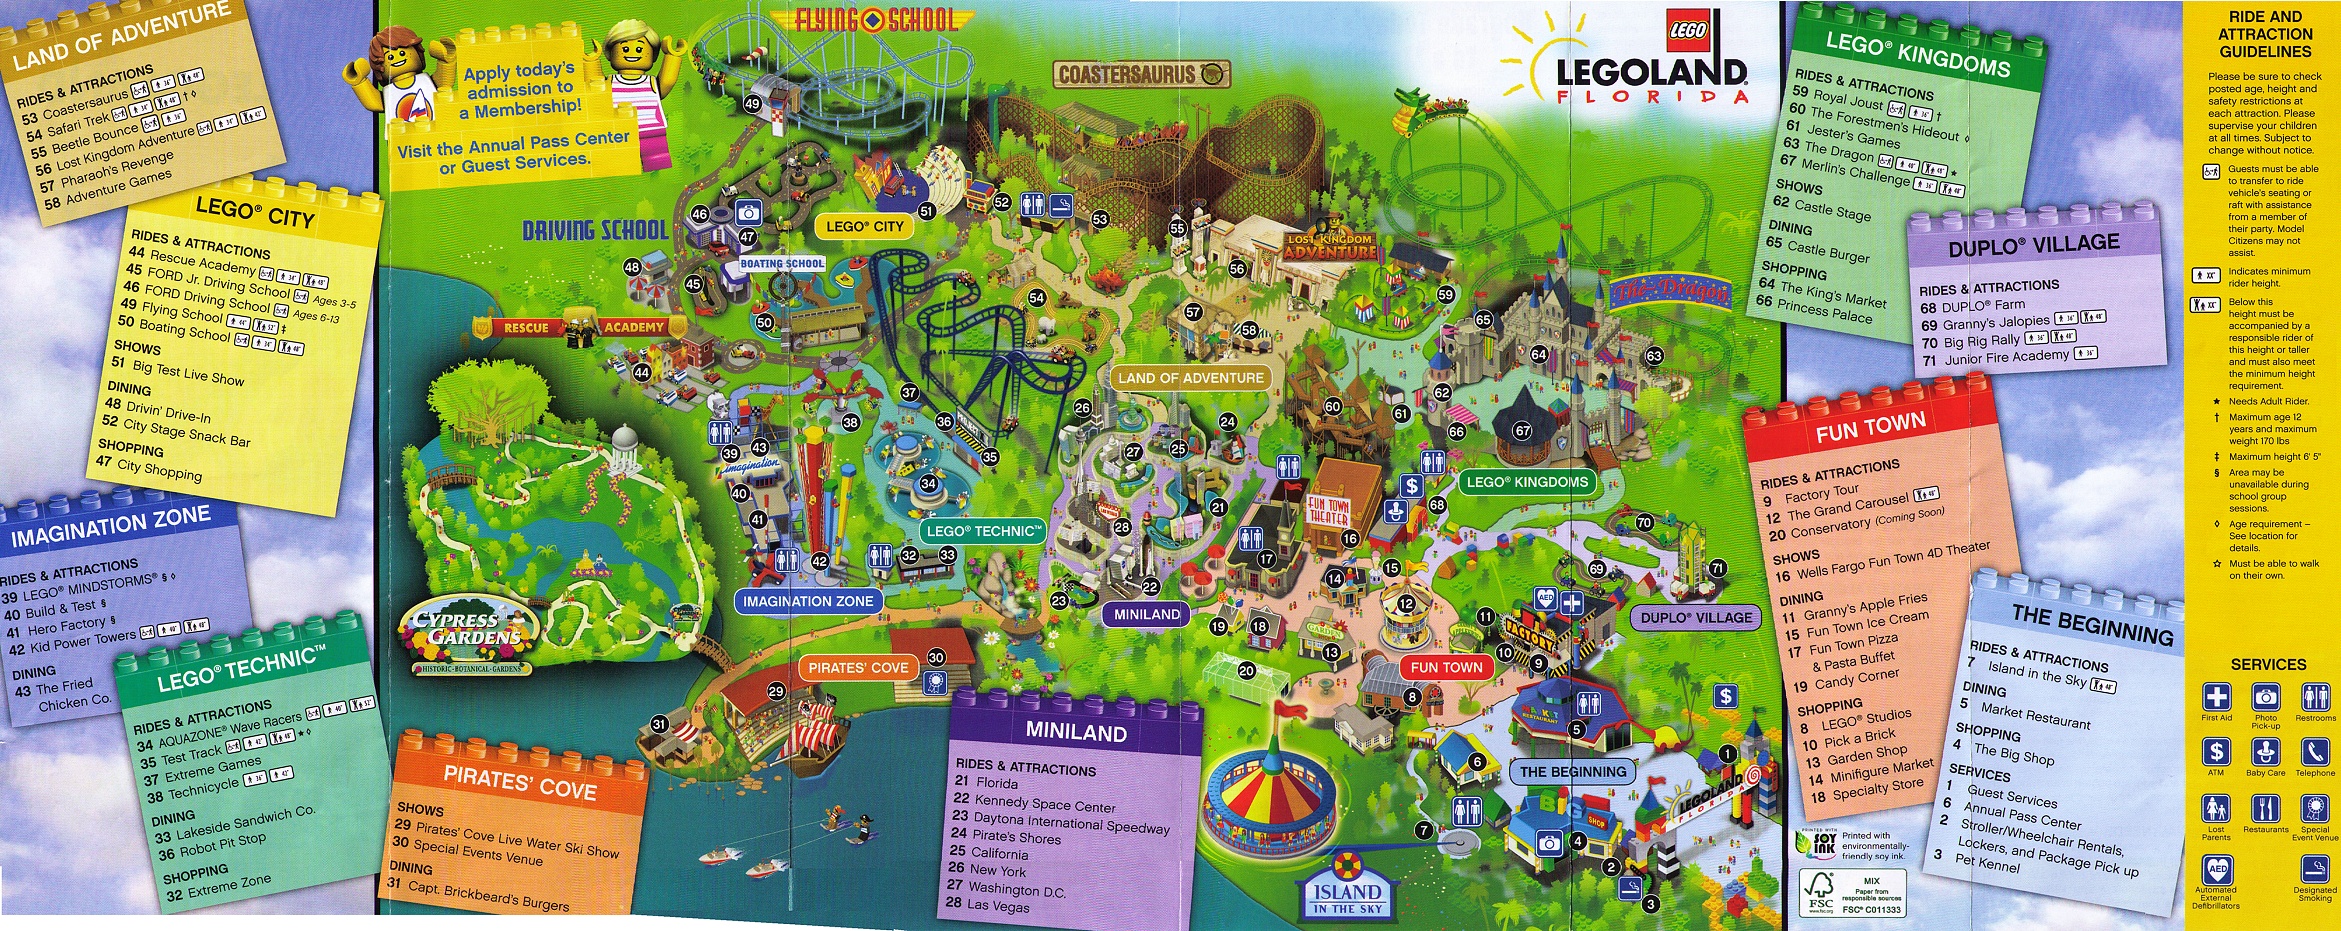 Legoland Florida - Park Map 1 Photo